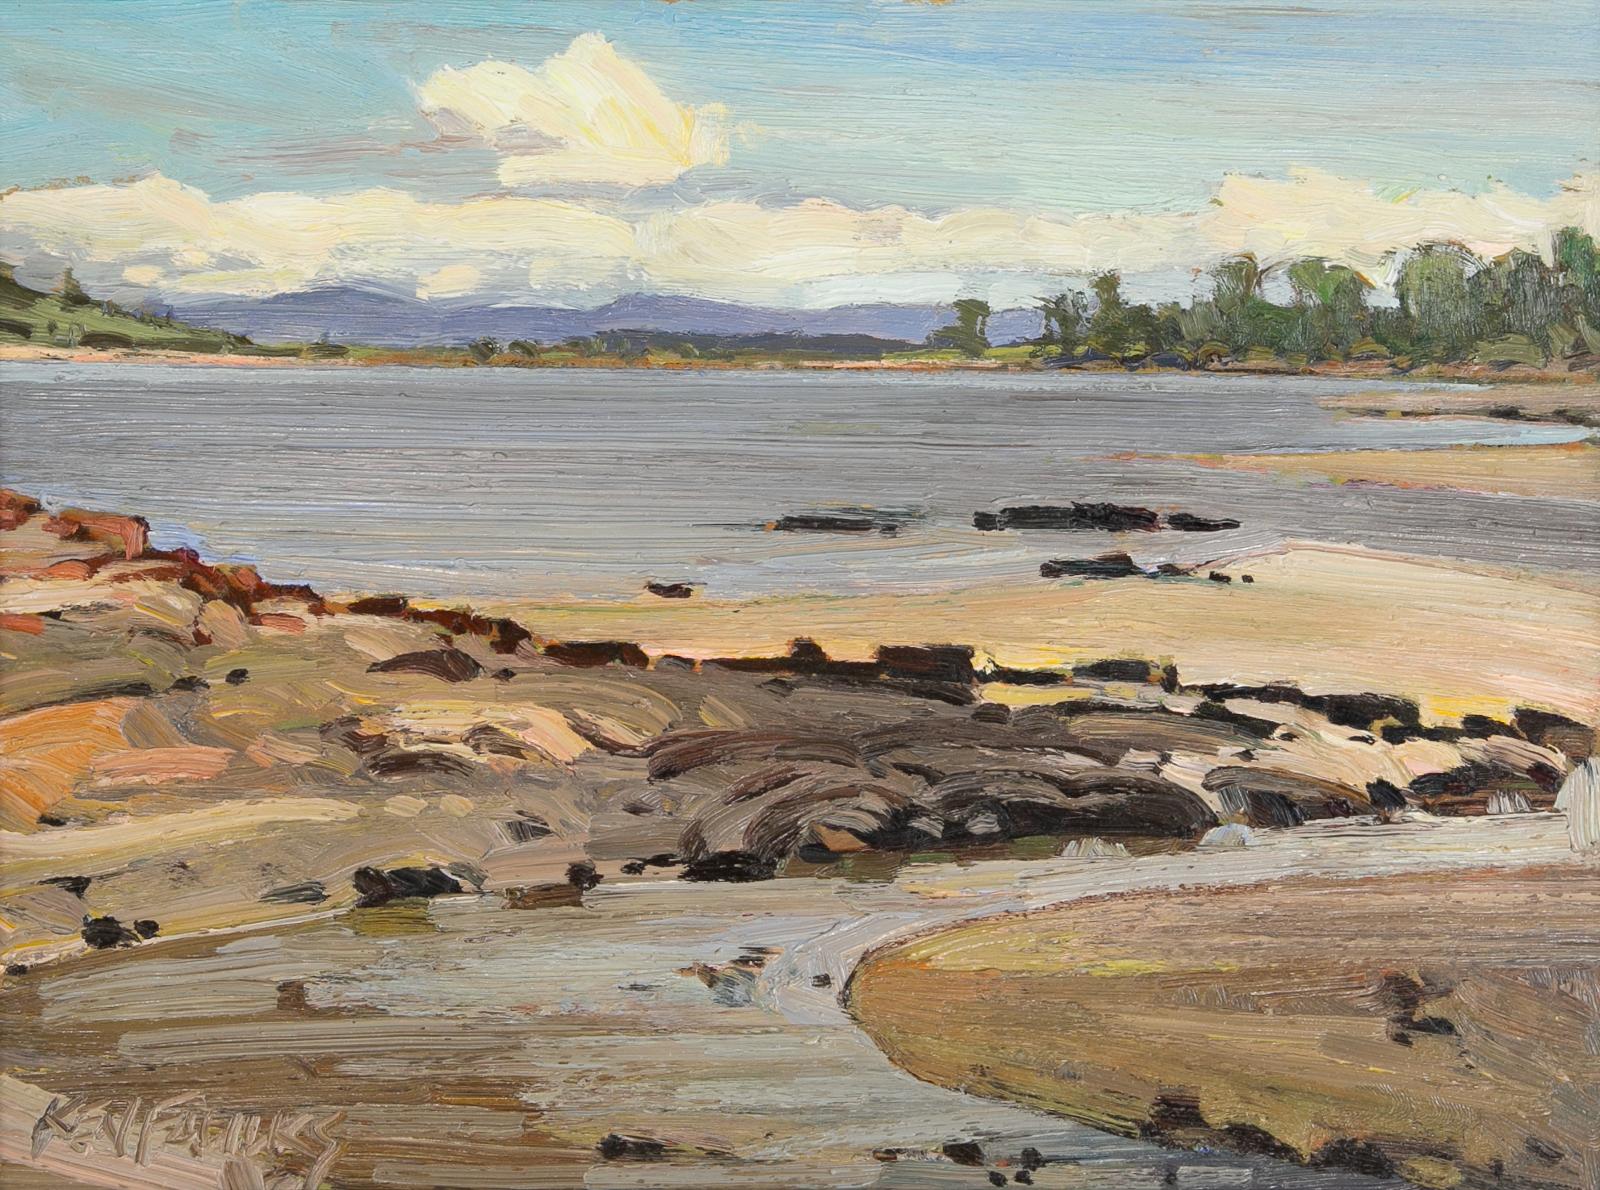 Ken Faulks (1964) - Sun At Saanichton Bay (Sandhill Creek)